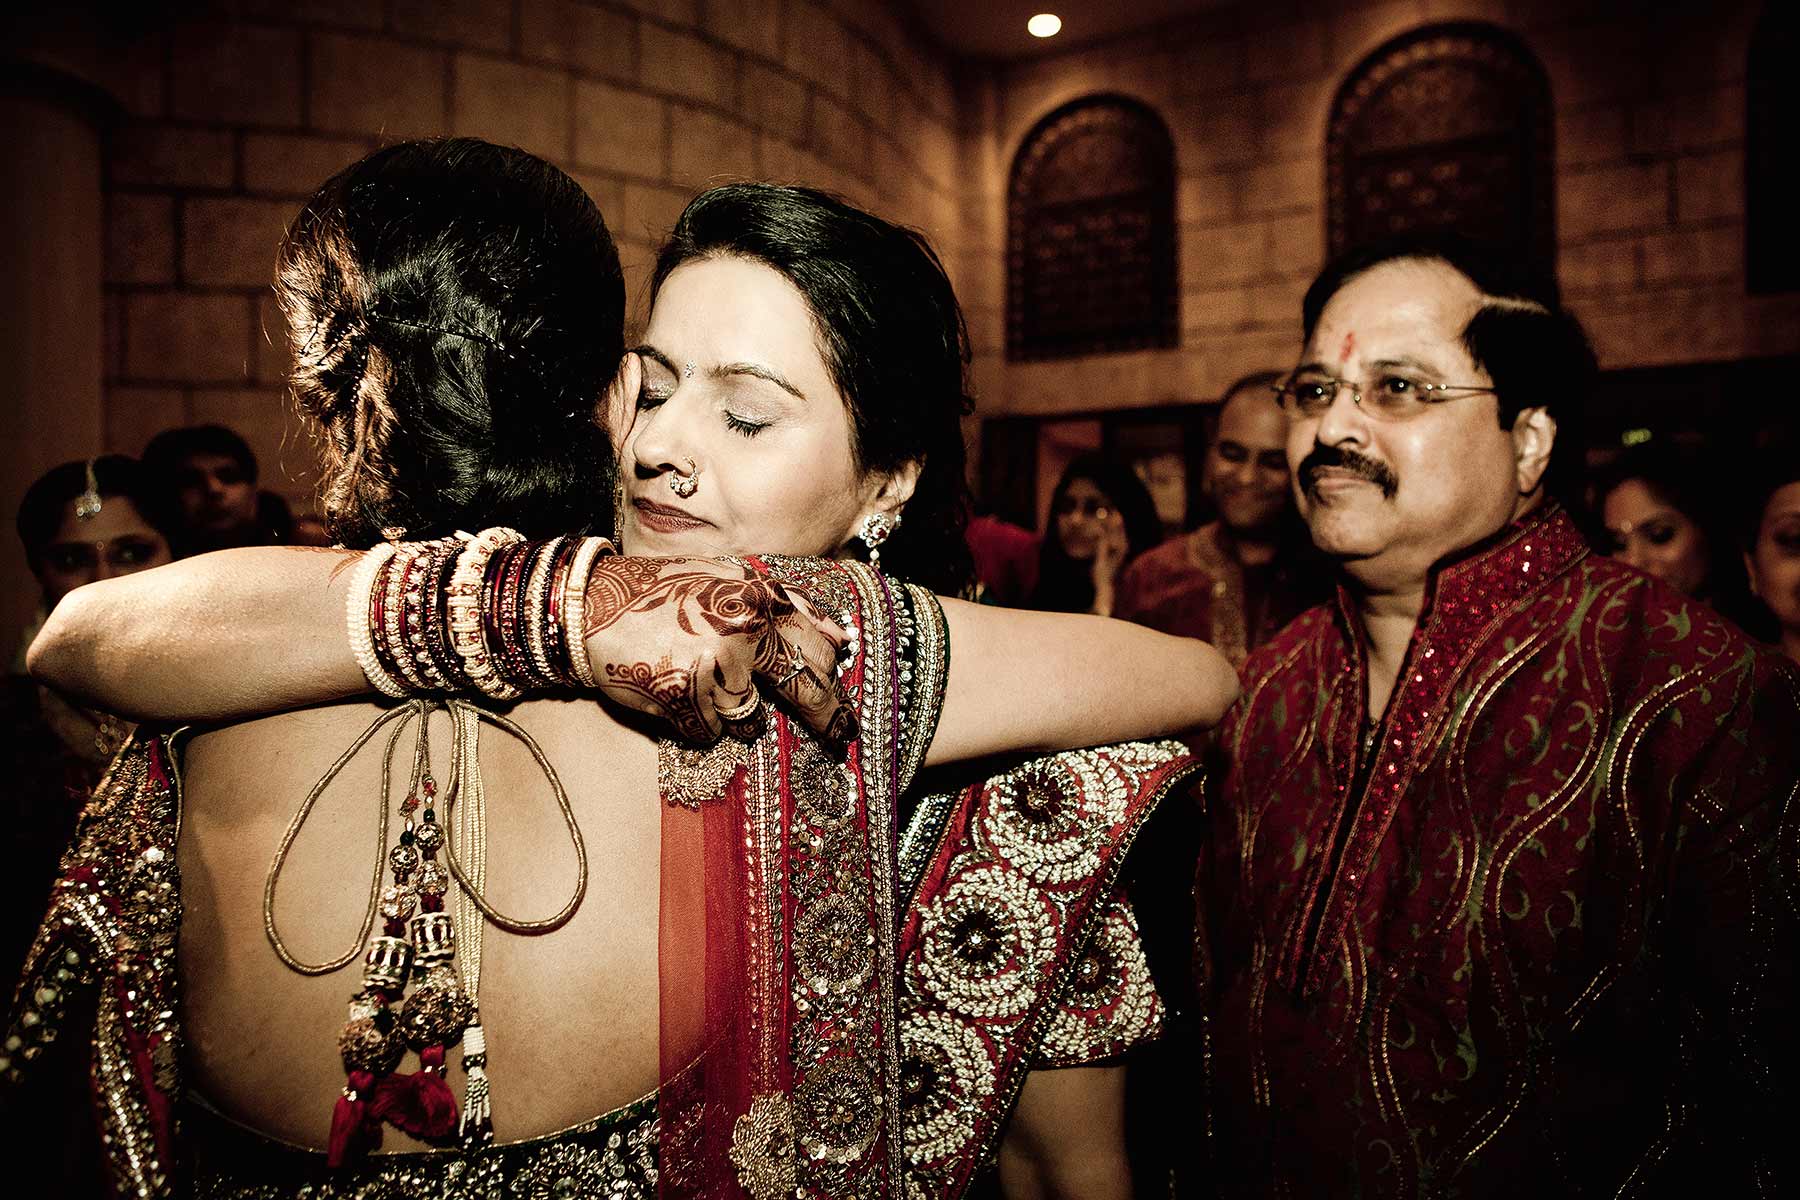 Indian wedding photography Dubai